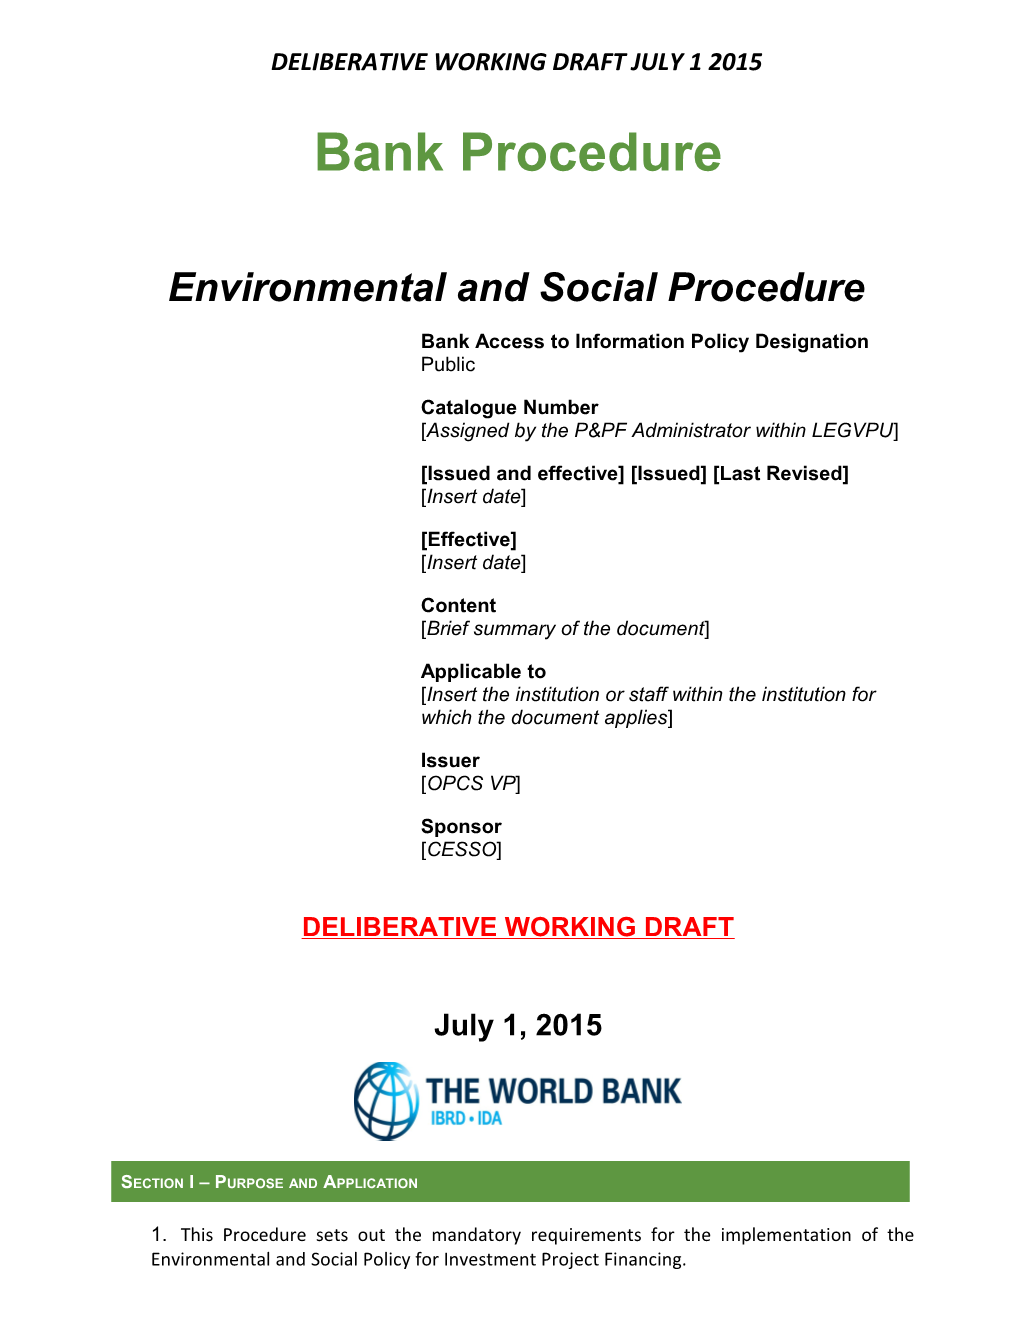 Environmental and Social Procedure